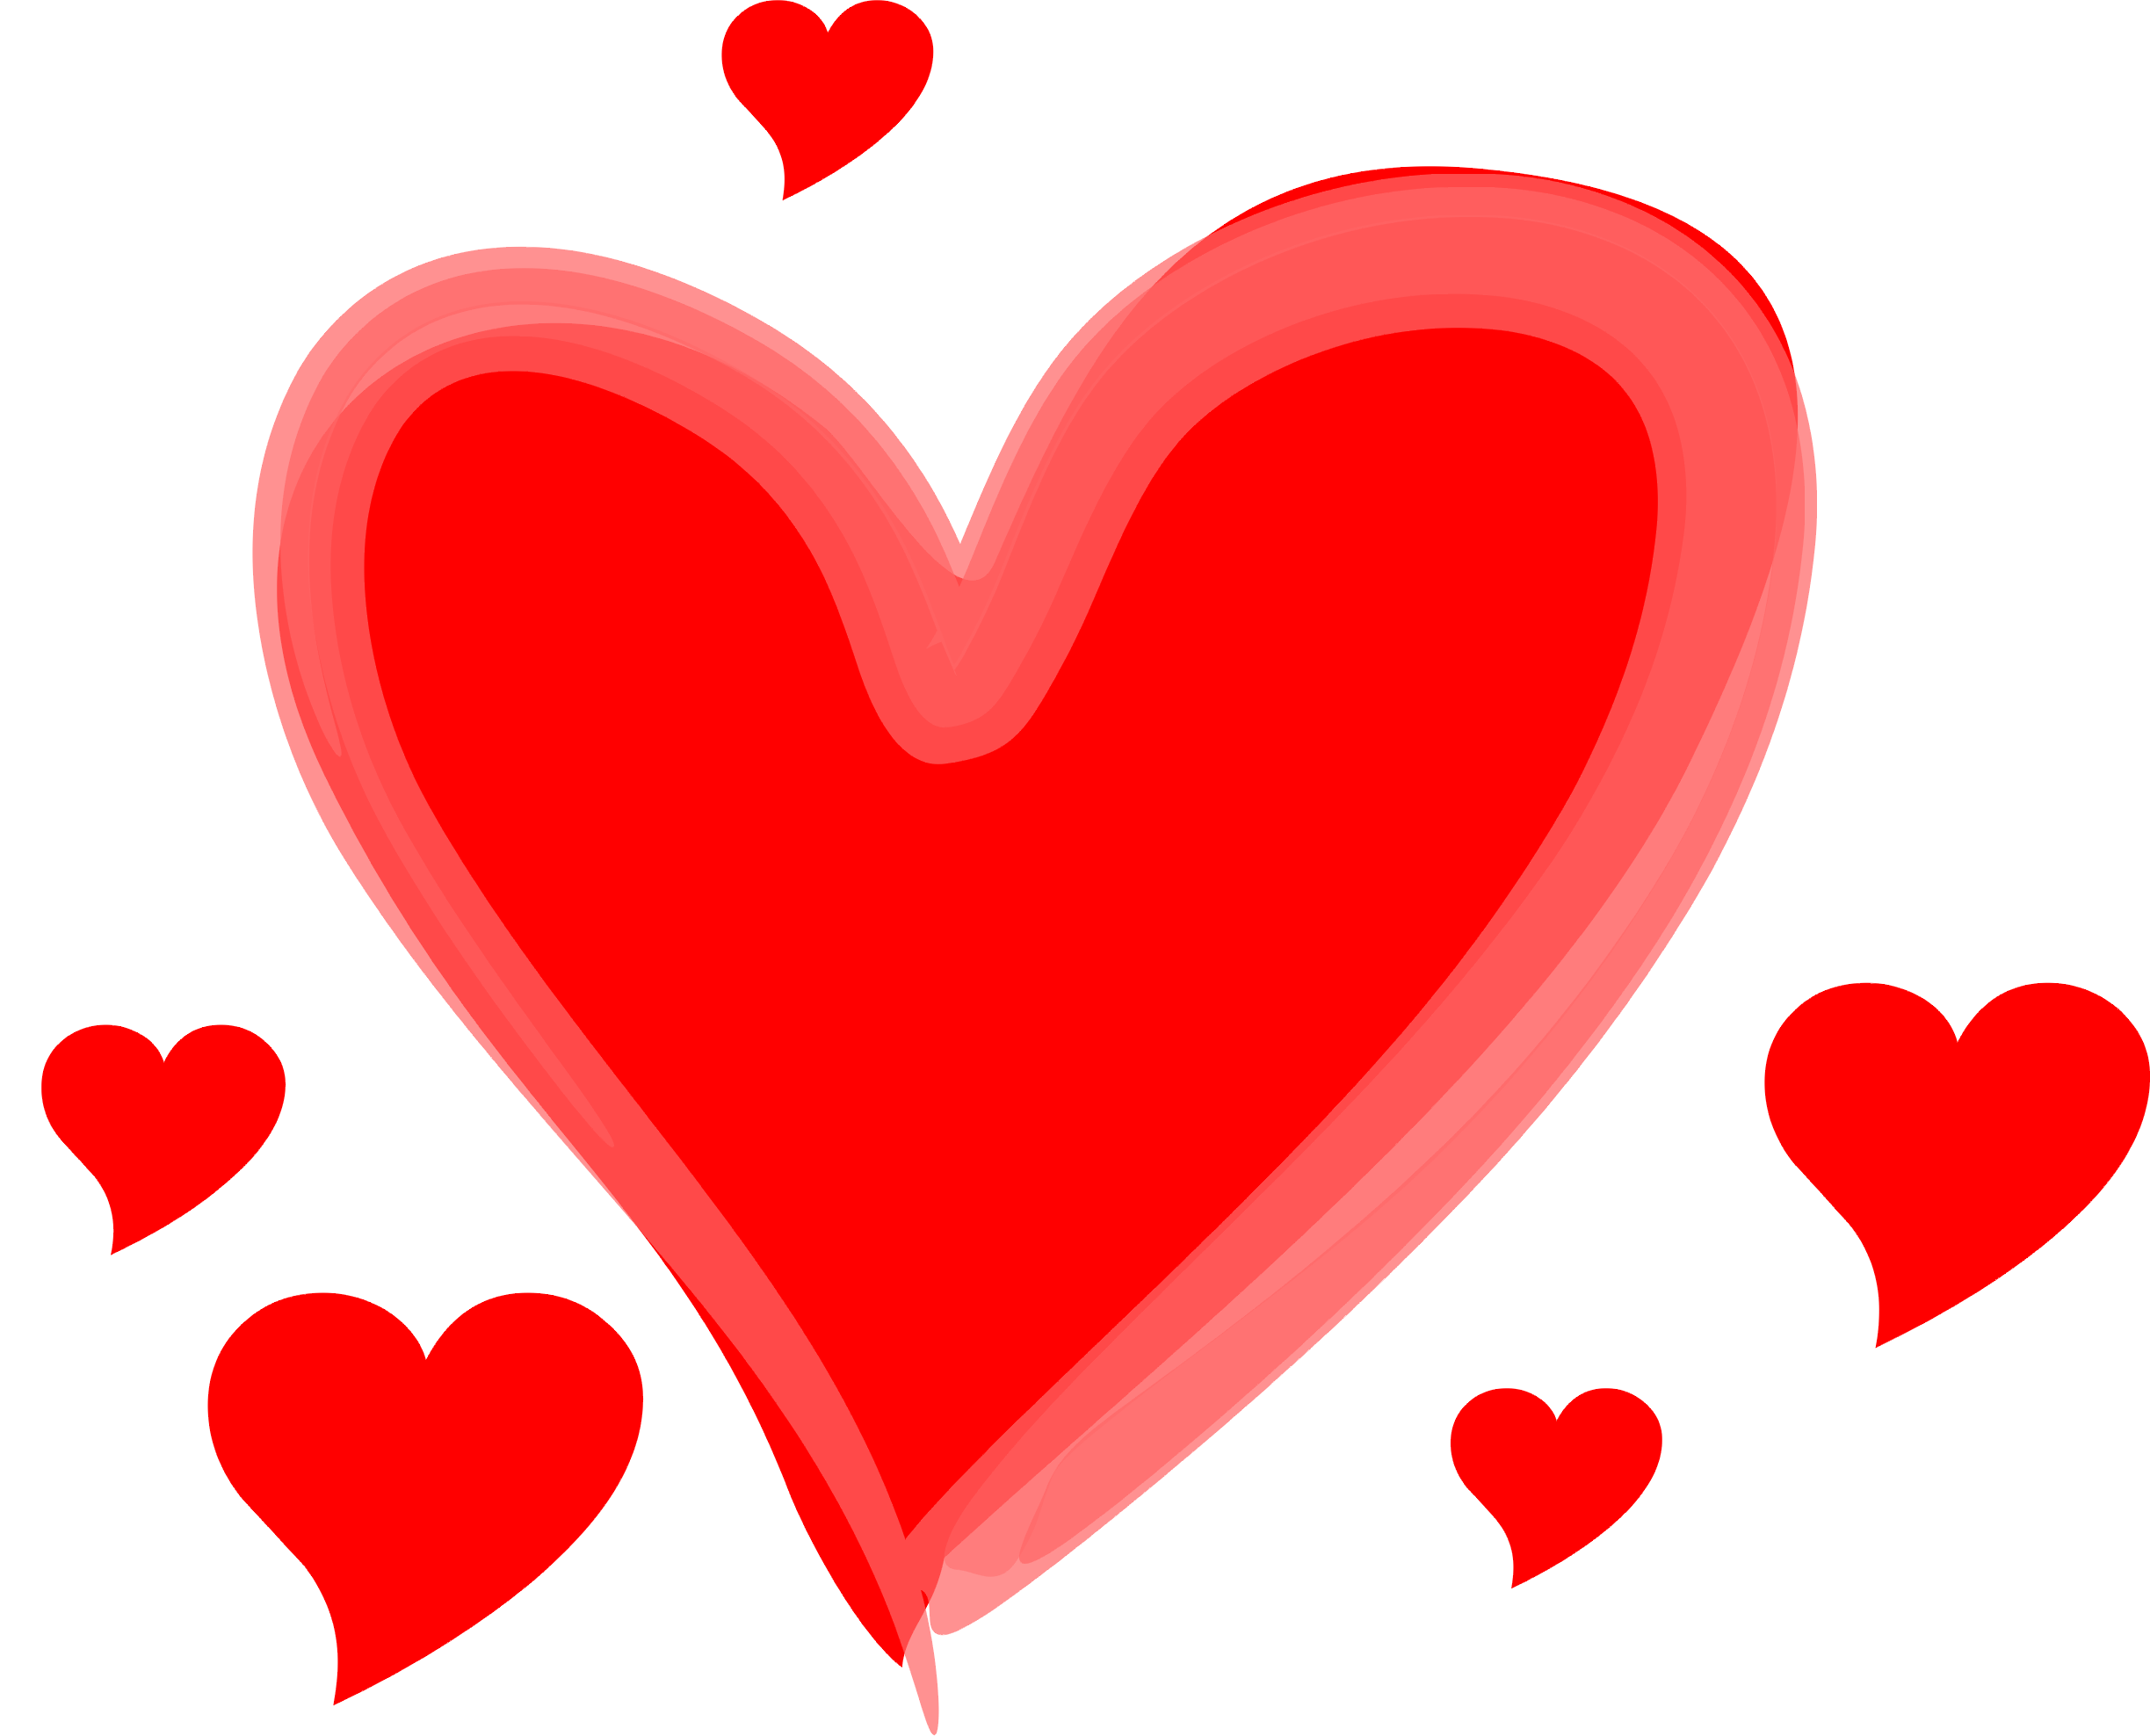 Love (cultural views) - Psychology Wiki